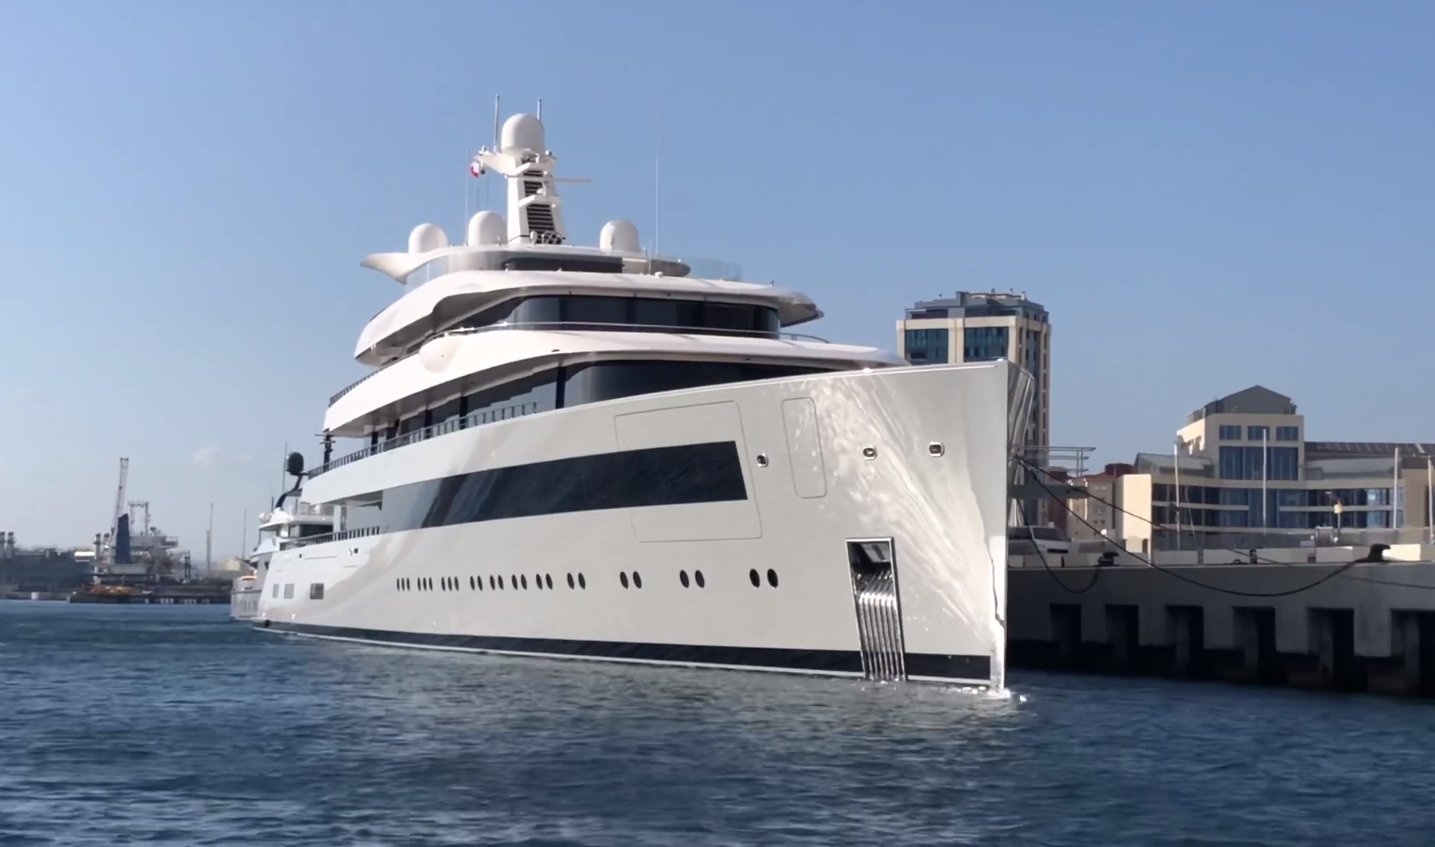 MOONRISE Yacht • Feadship • 2020 • Owner Jan Koum